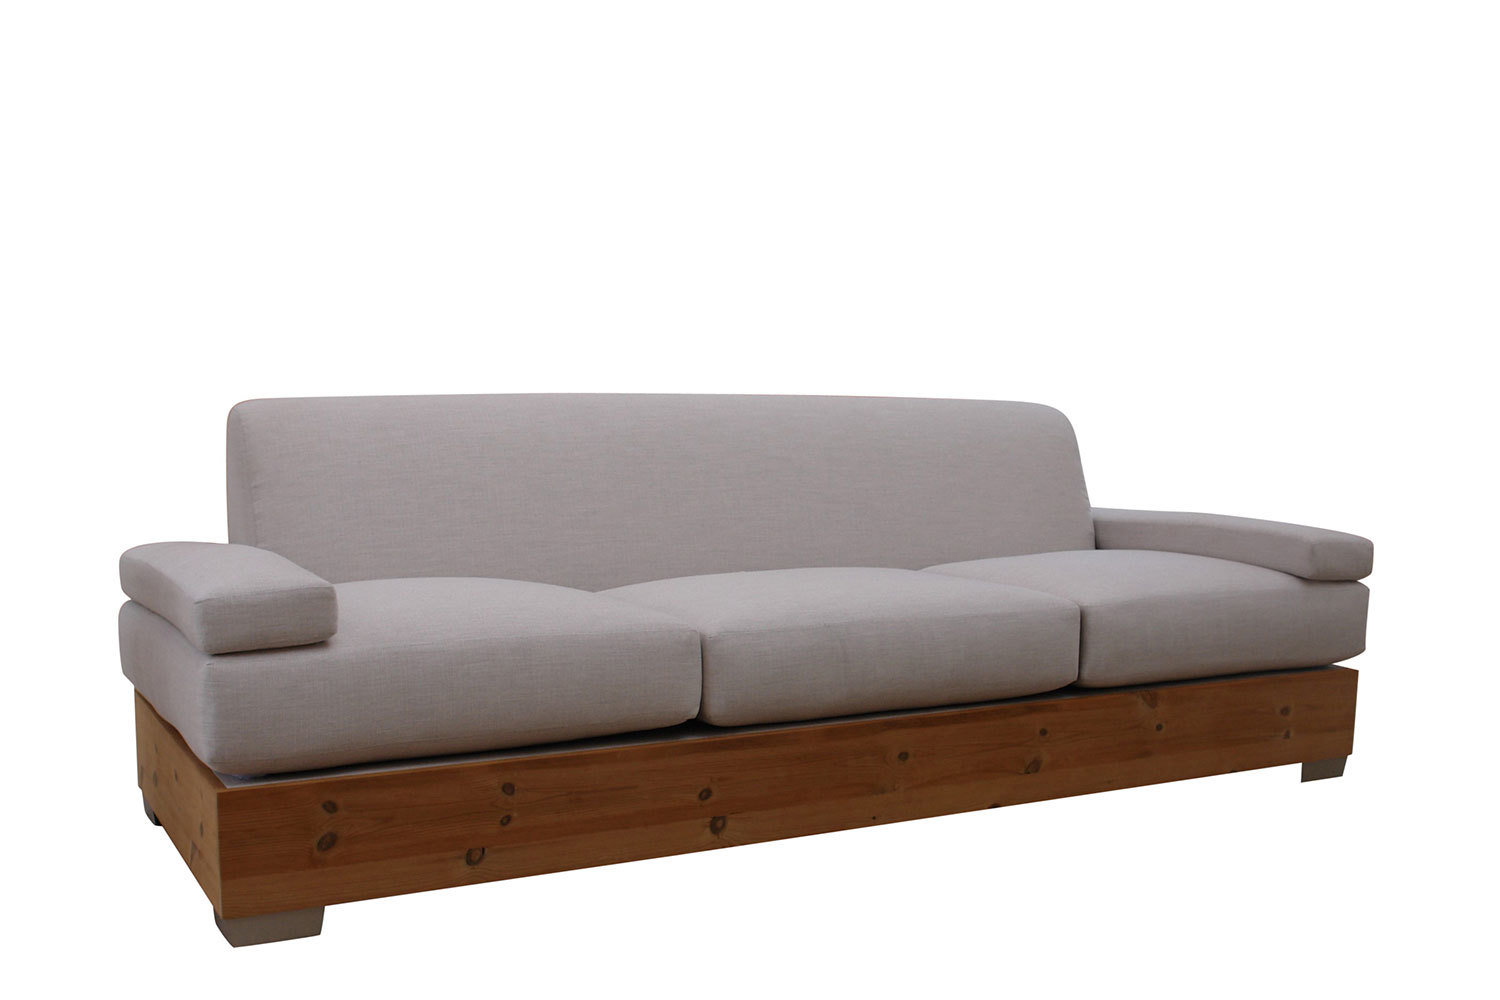 Sofa With Wood Base